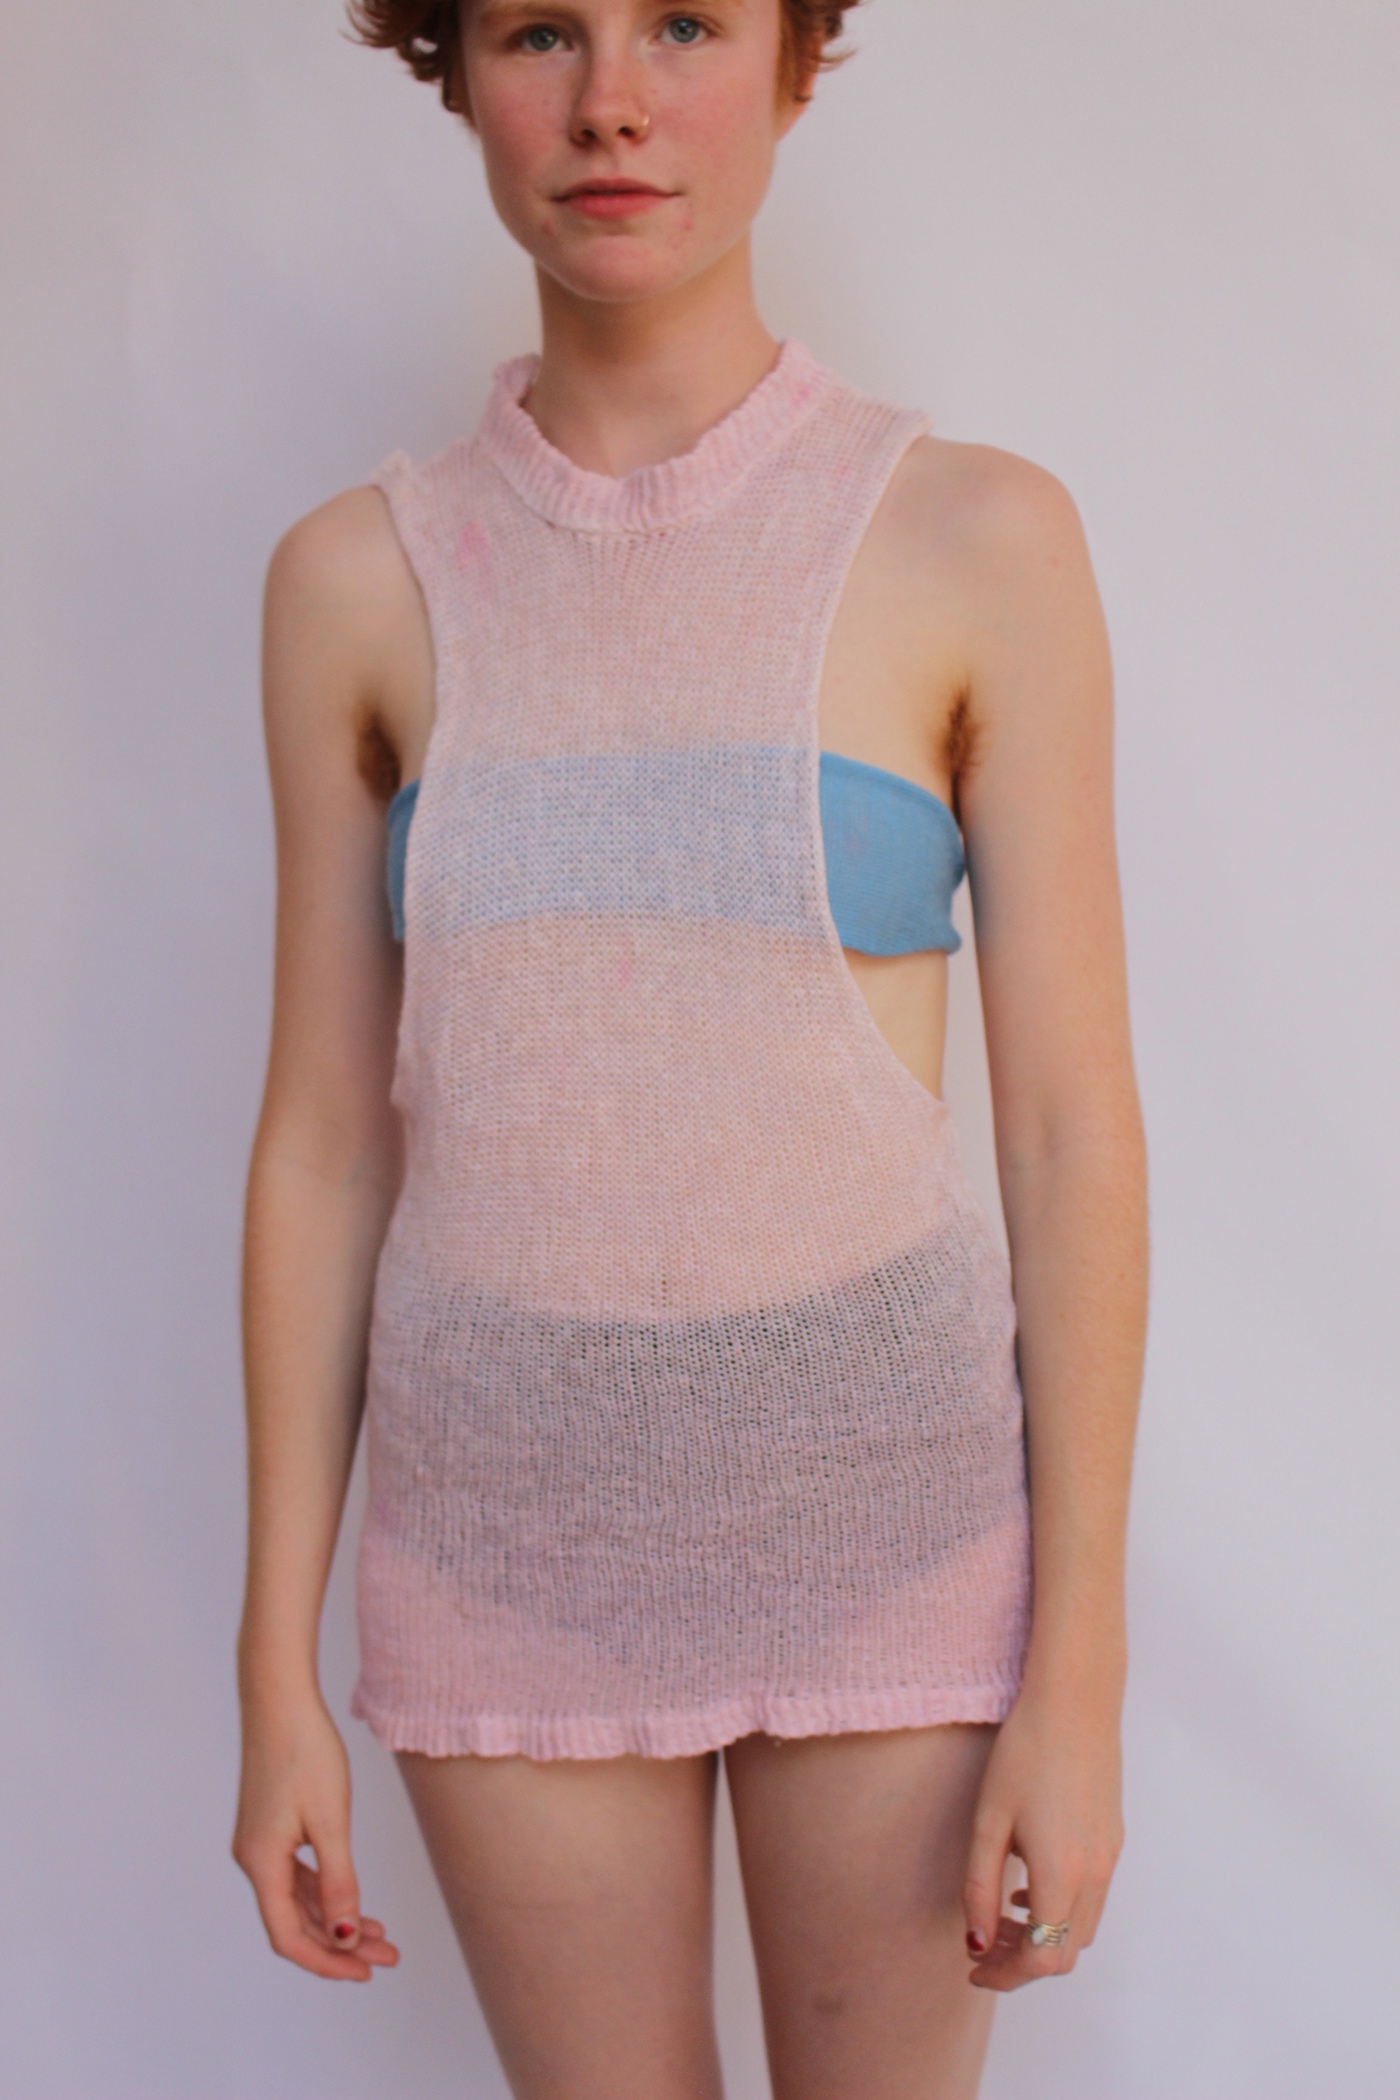 knitting tanktop yarn cotton apparel top